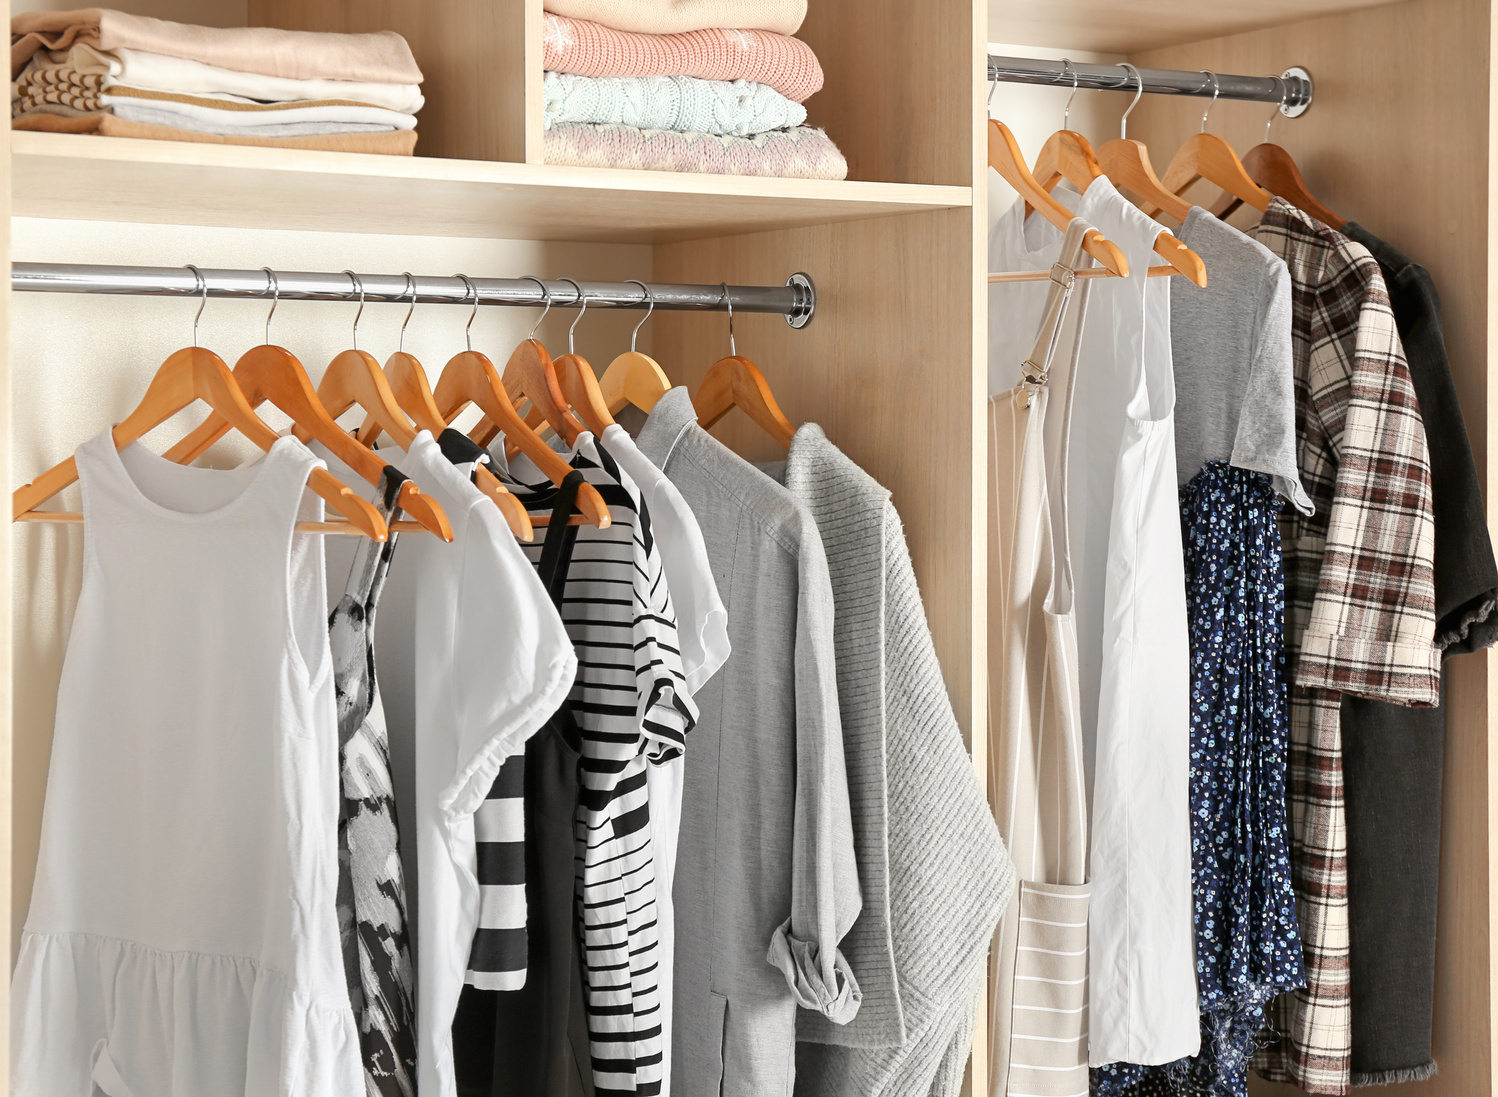 Organized Clothes in Closet